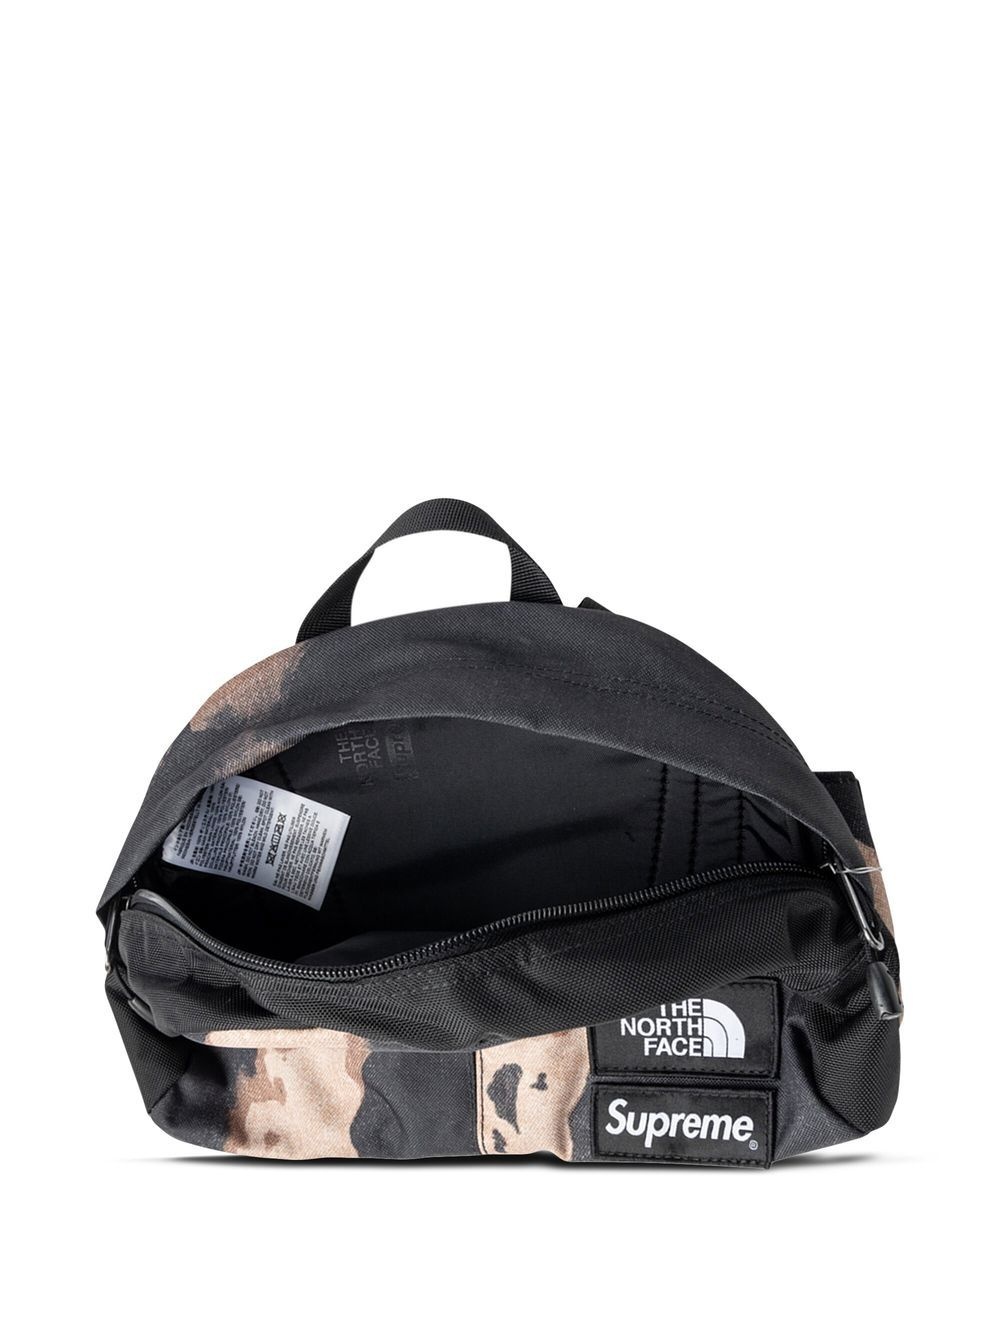 Supreme x The North Face Roo II belt bag | REVERSIBLE